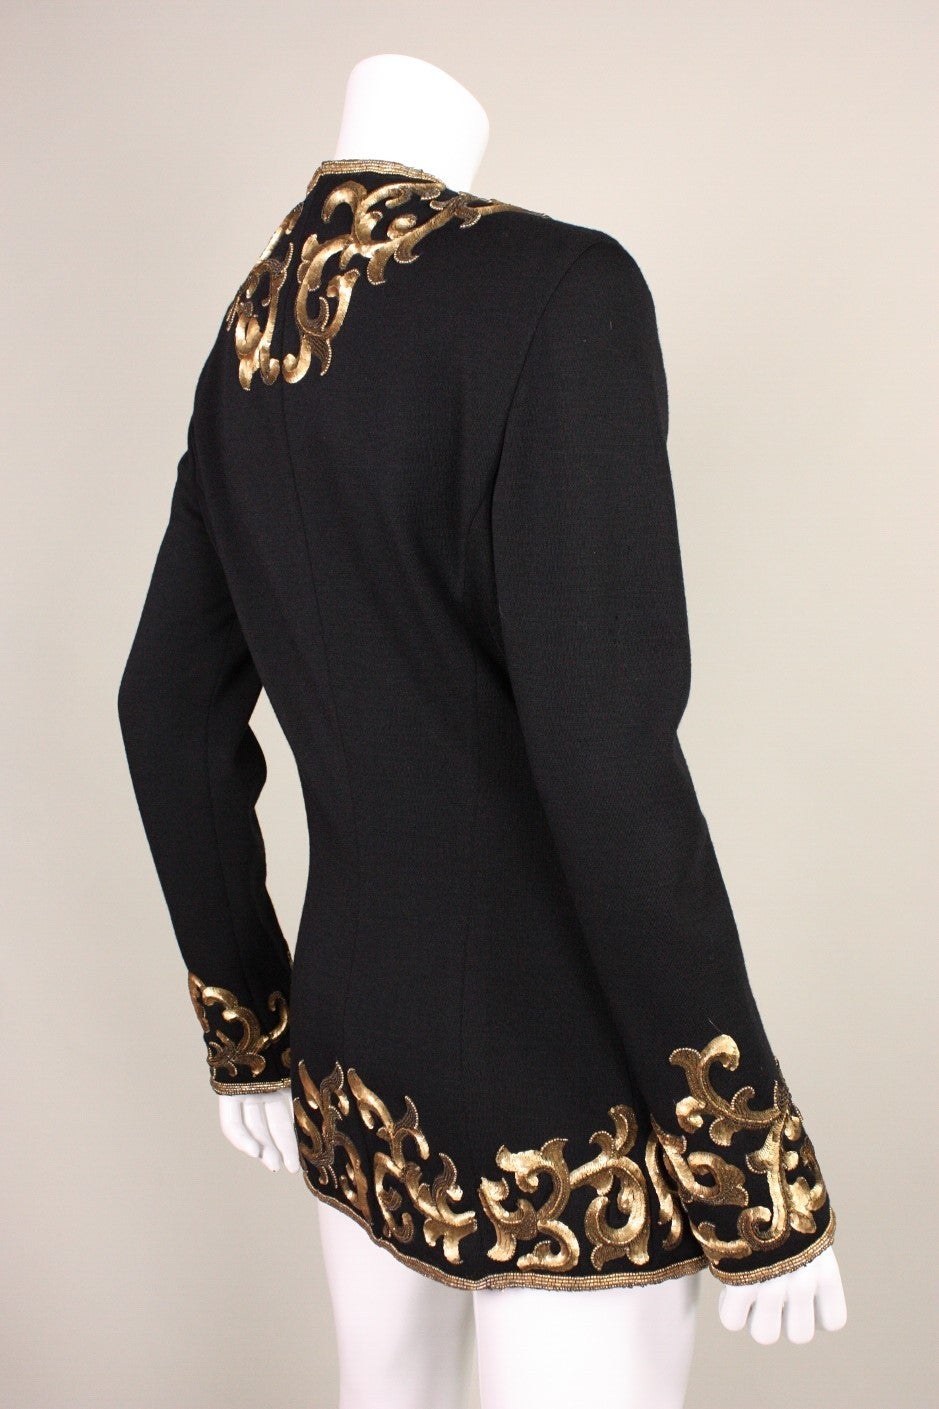 Women's Donna Karan Black Jacket with Gold Sequined Embellishment